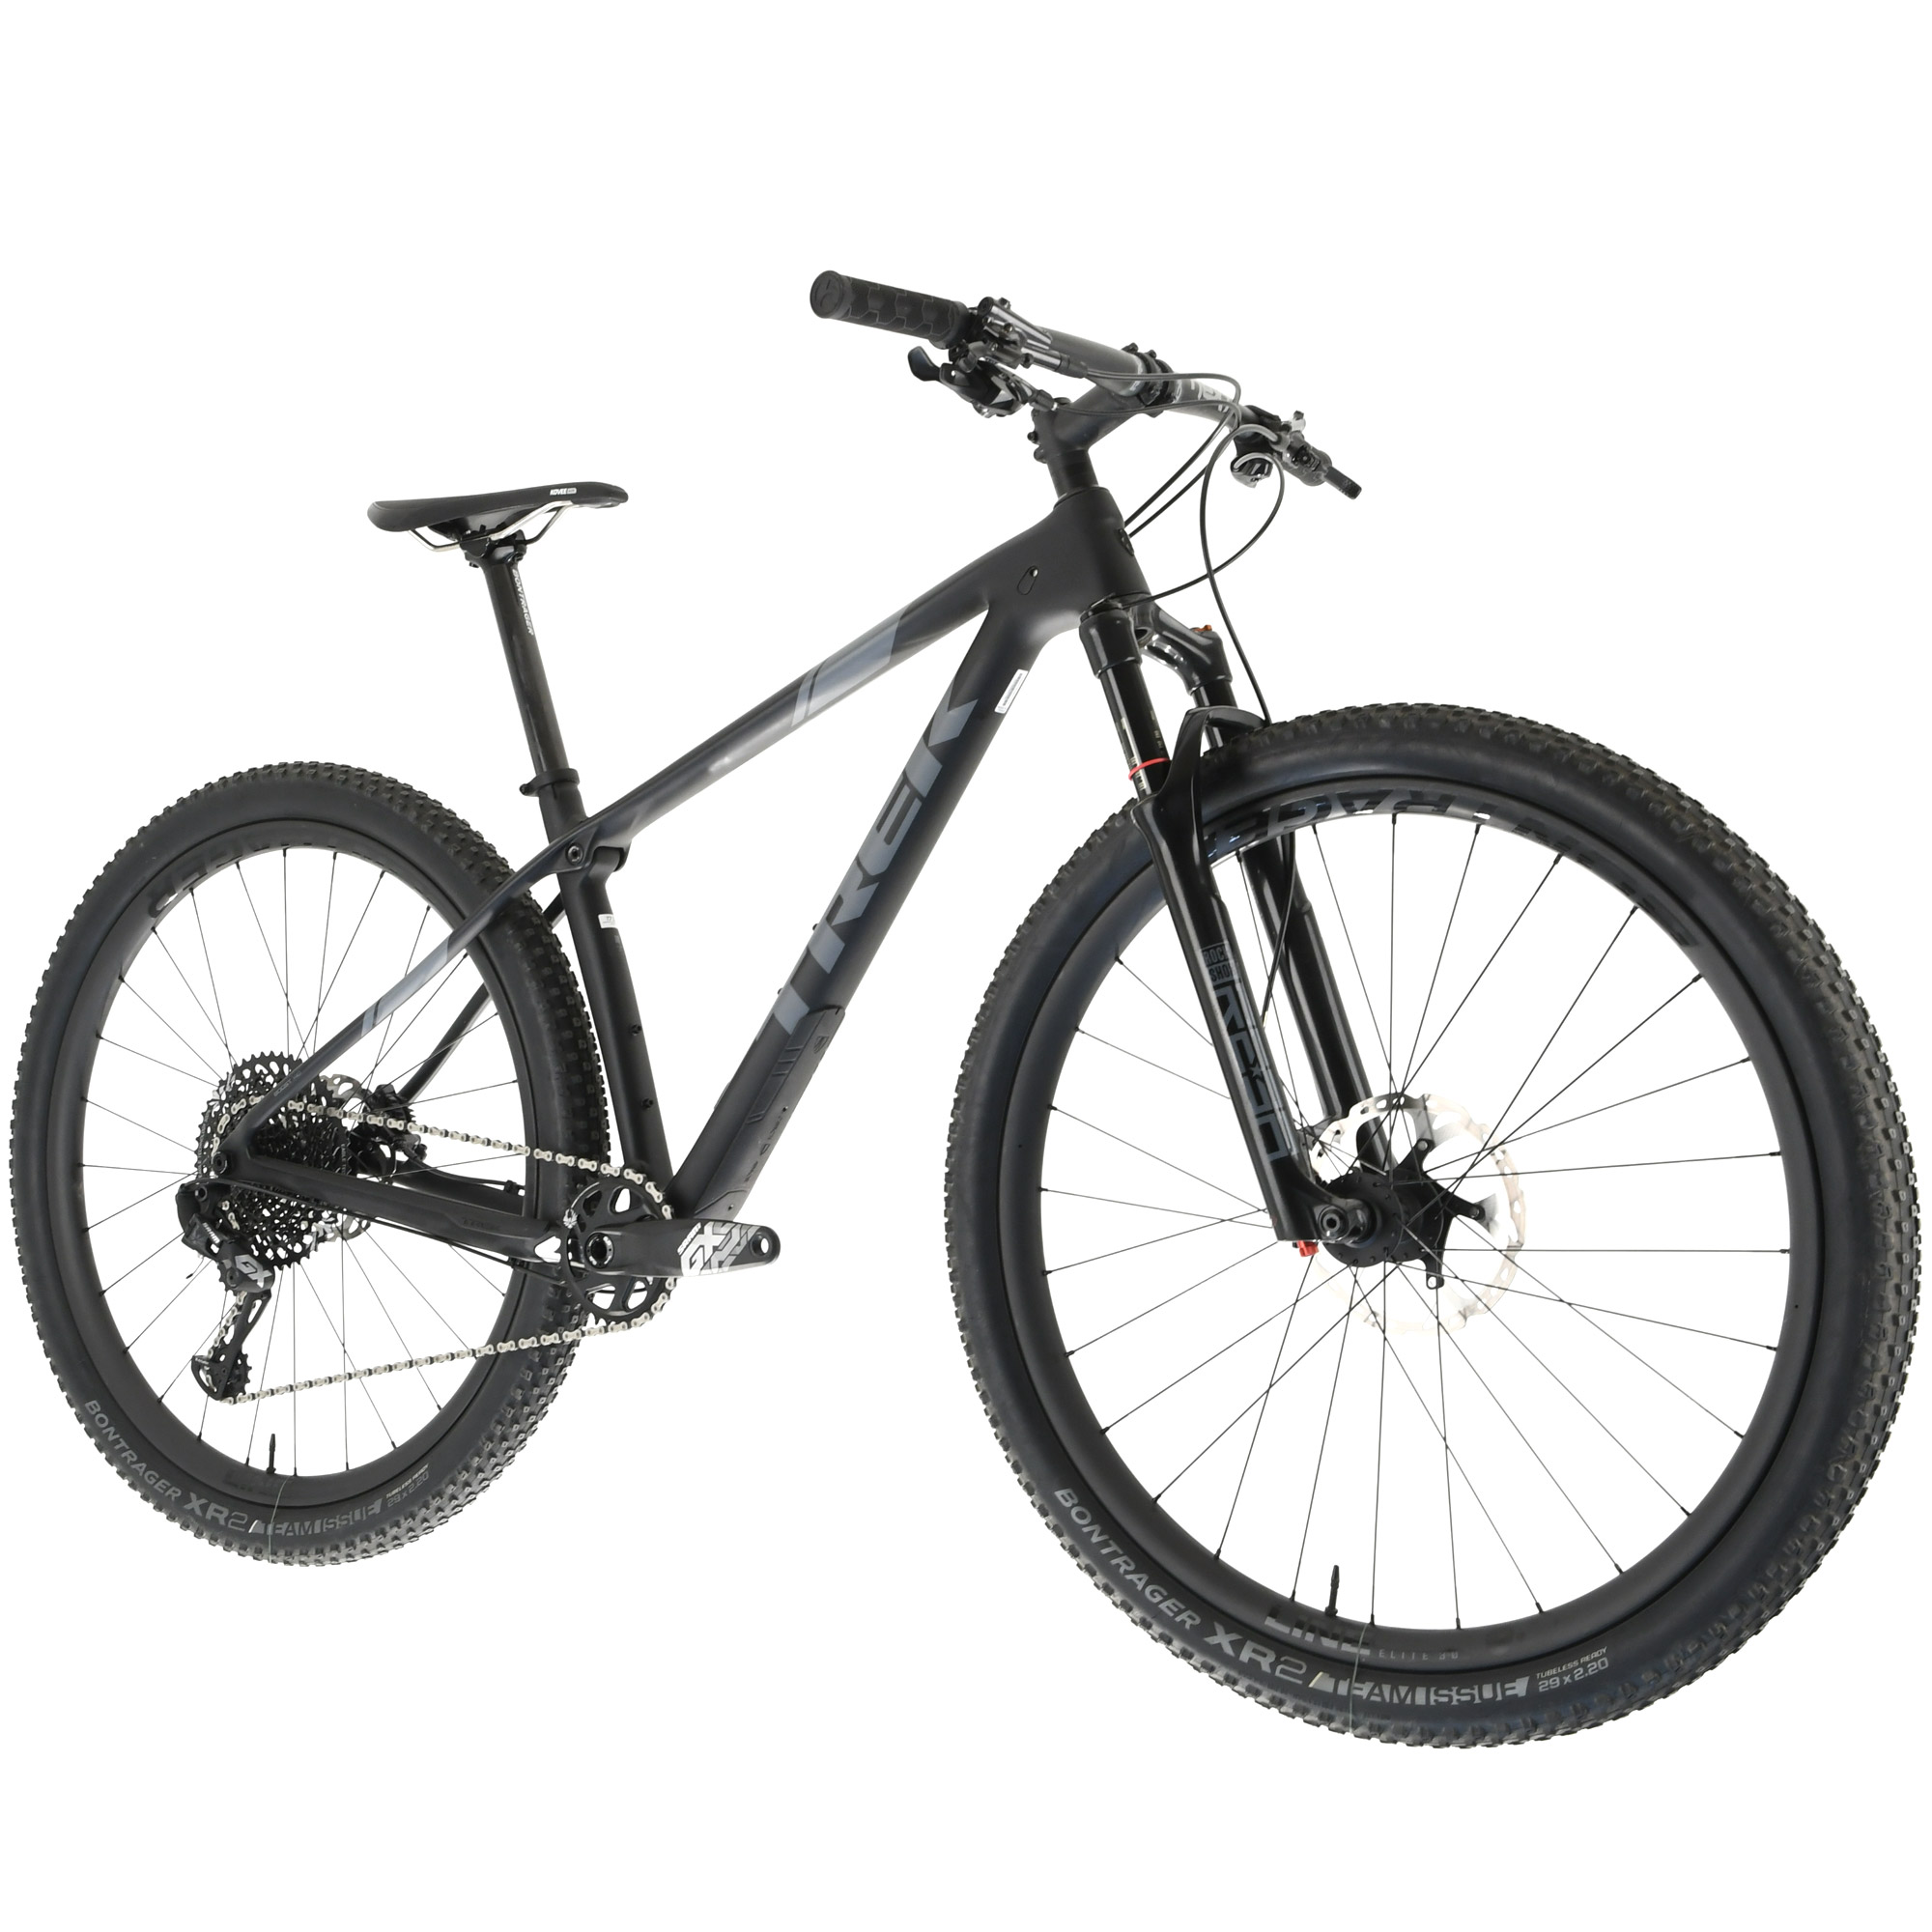 Bicycle for Sale: 2019 Trek Procaliber 9.6 Hardtail Mountain Bike MED 17.5 29r 1x12 Eagle/Blk/Grey in Appleton, Wisconsin